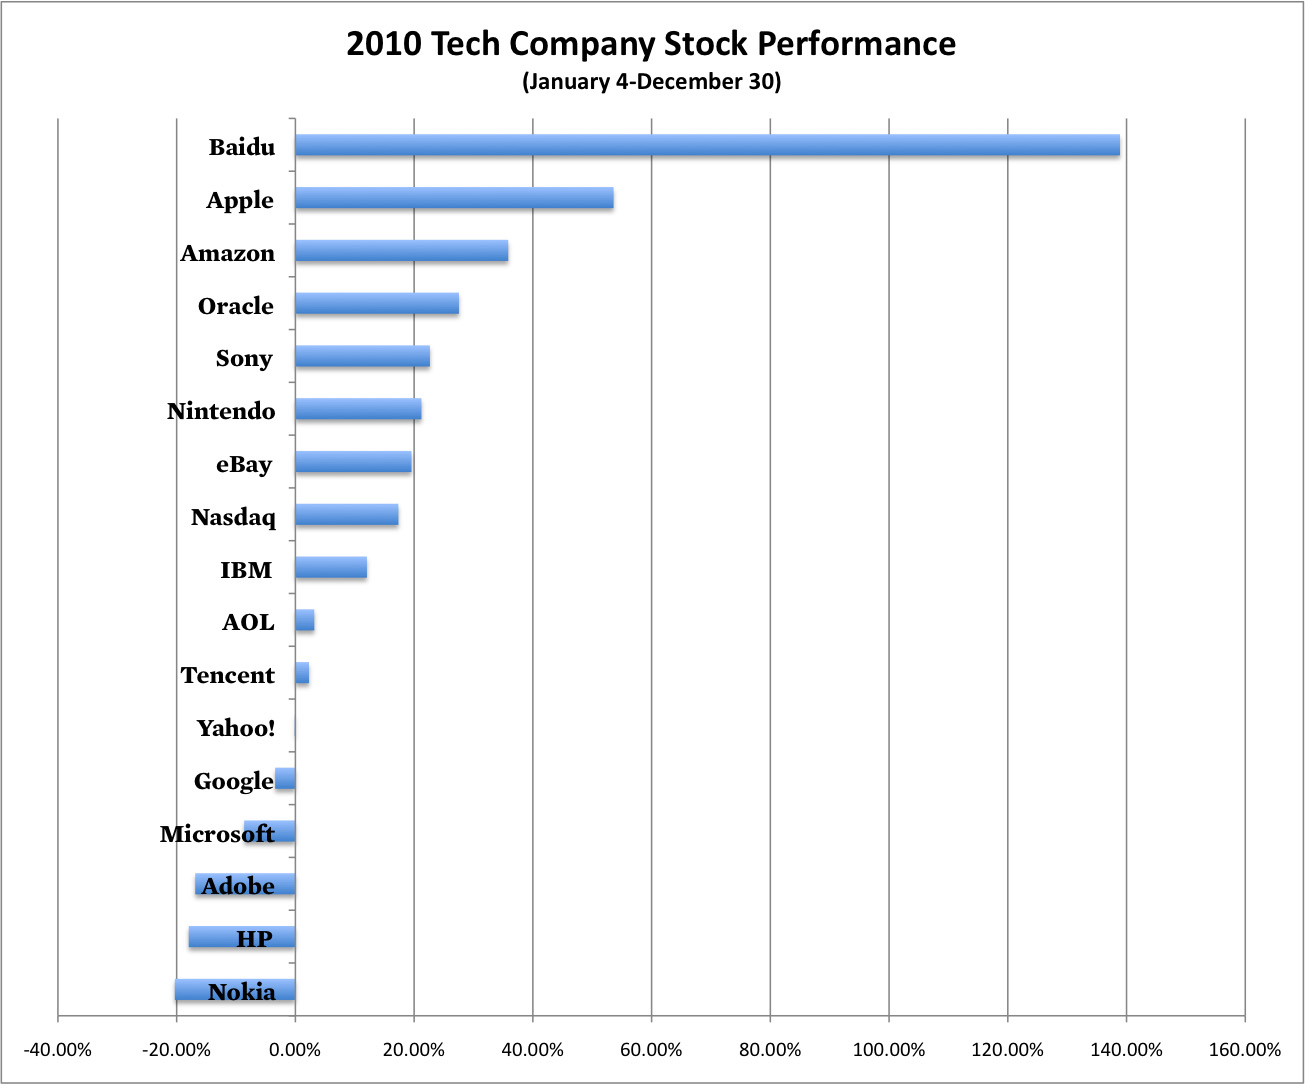 10 Biggest Technology Companies